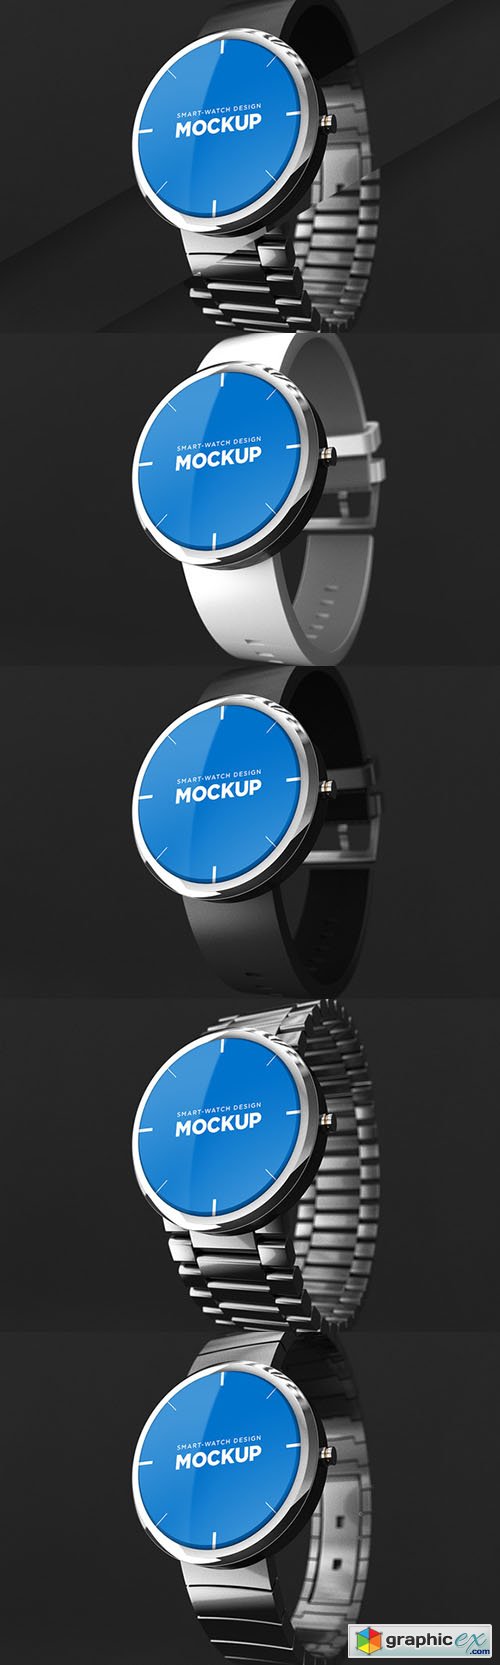 Smart-watch Design Mockup